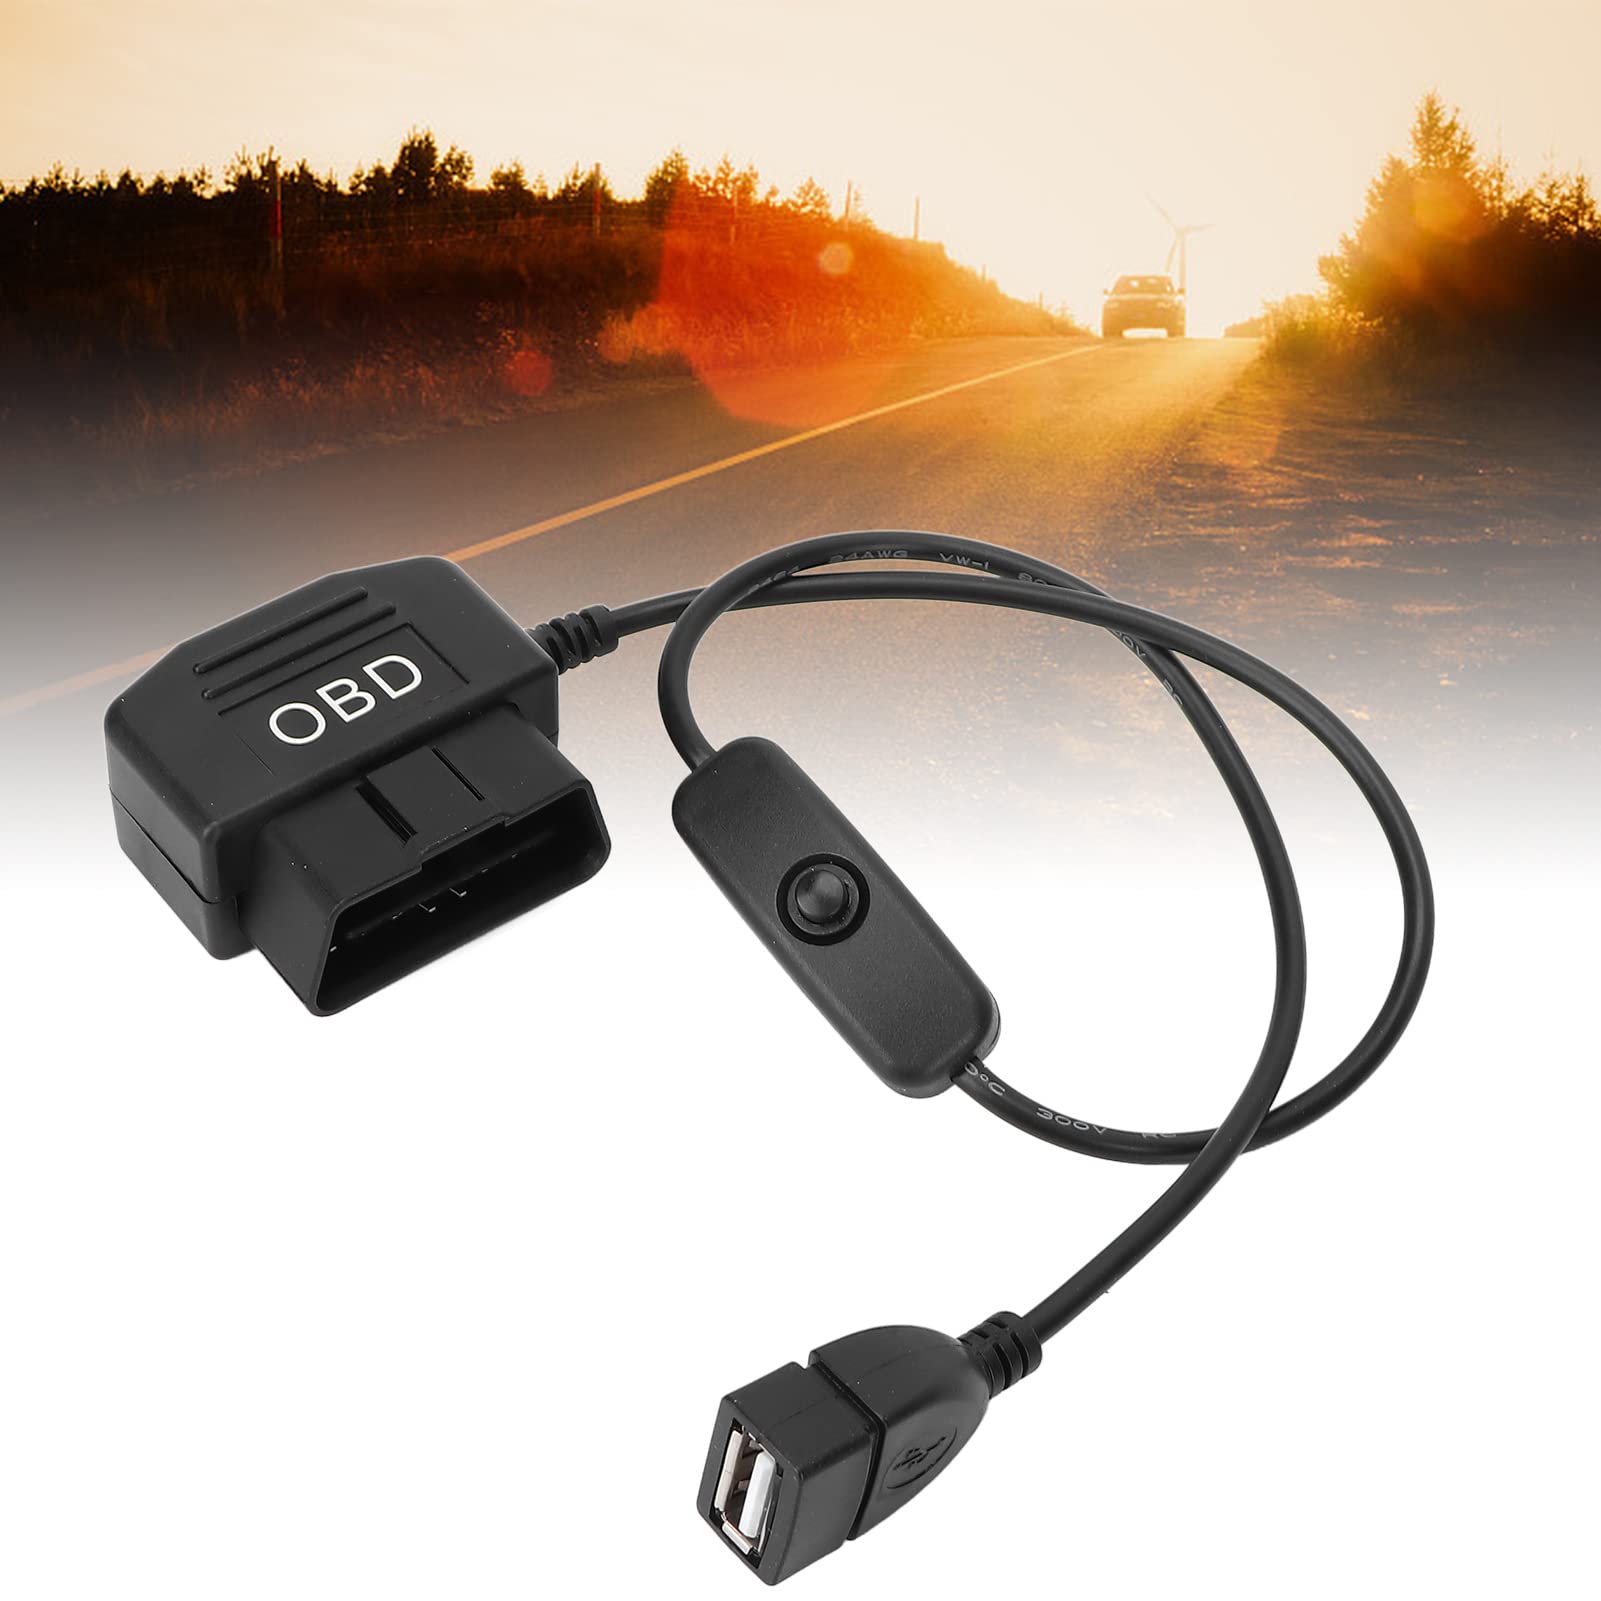 OBD-Kabelverlängerungs-Adapter, OBD-Kabel, 16-polig, OBD2-Stecker, 16-polig, USB-Ladekabel, OBD-Adapter, Universal-Stecker, 46,7 cm (18,9 Zoll) von Majatou